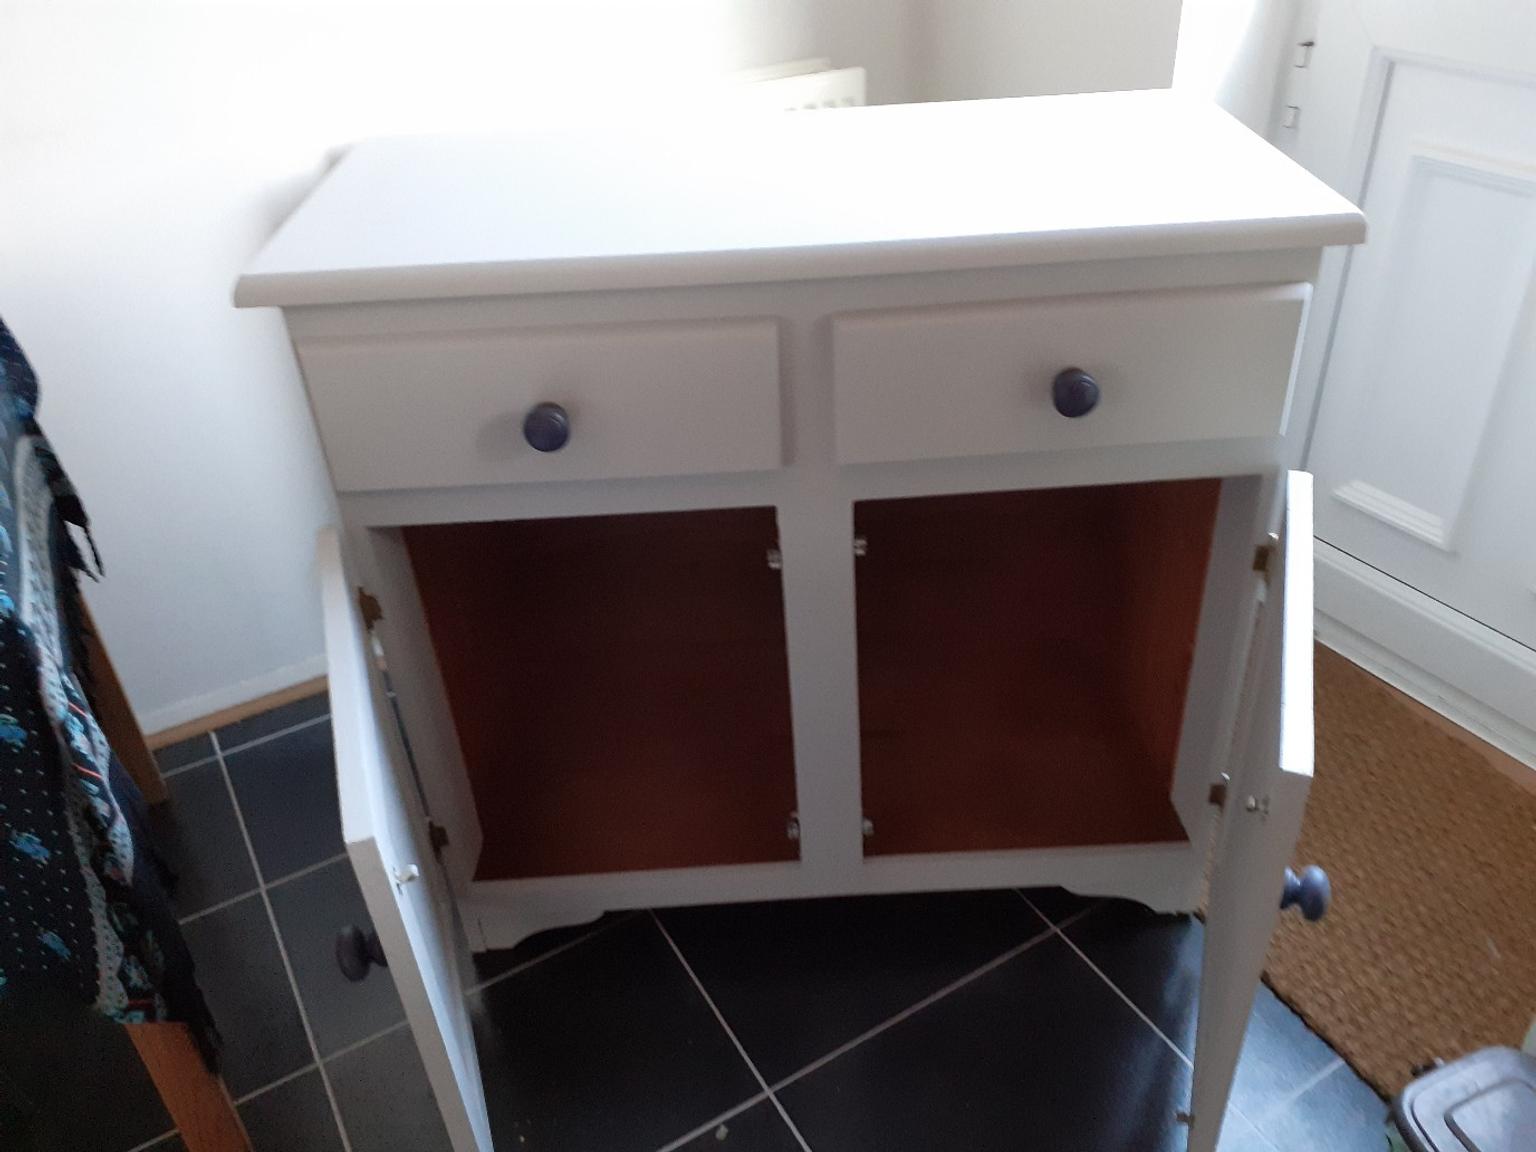 Pine Dawn Blue Dresser Cabinet In Cf Cardiff Fur 60 00 Zum